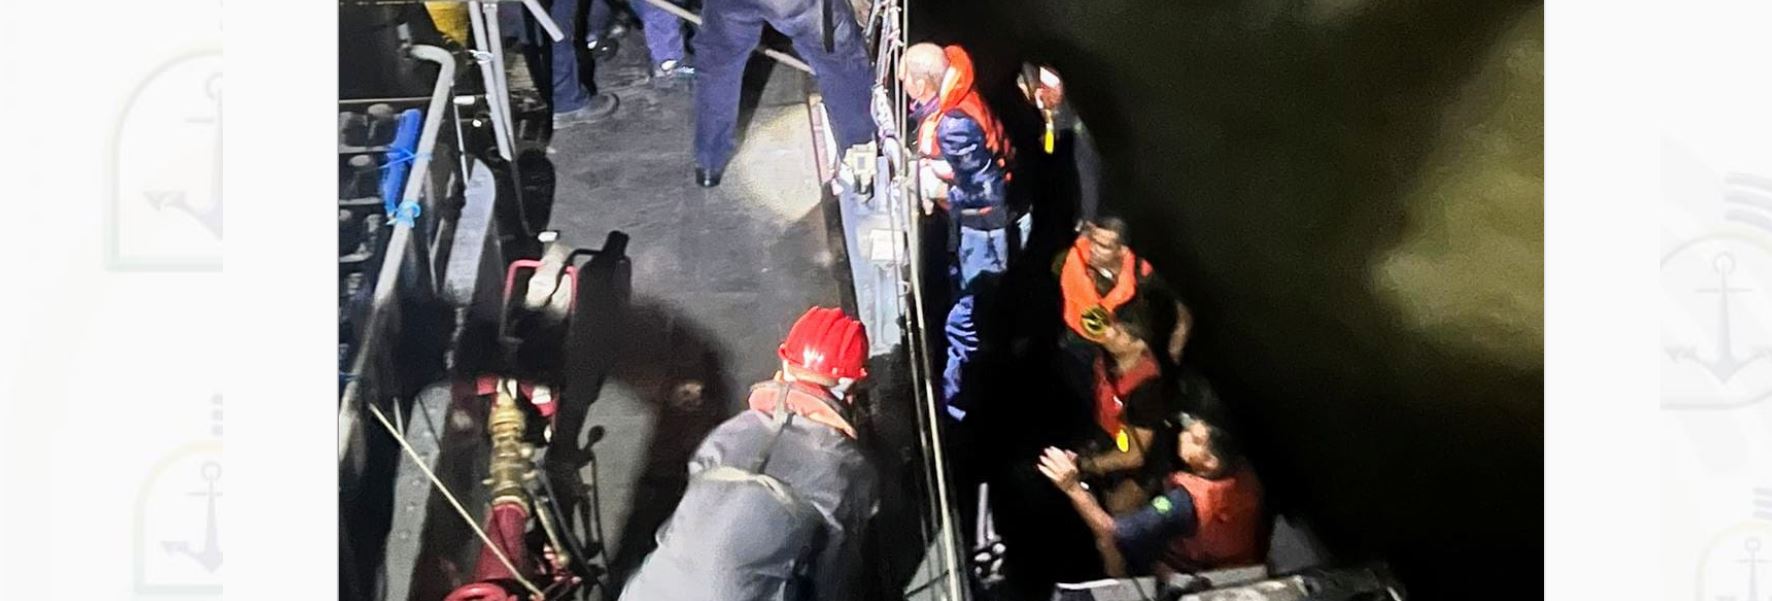 Marinha do Brasil resgata tripulante de navio mercante na costa do Pará